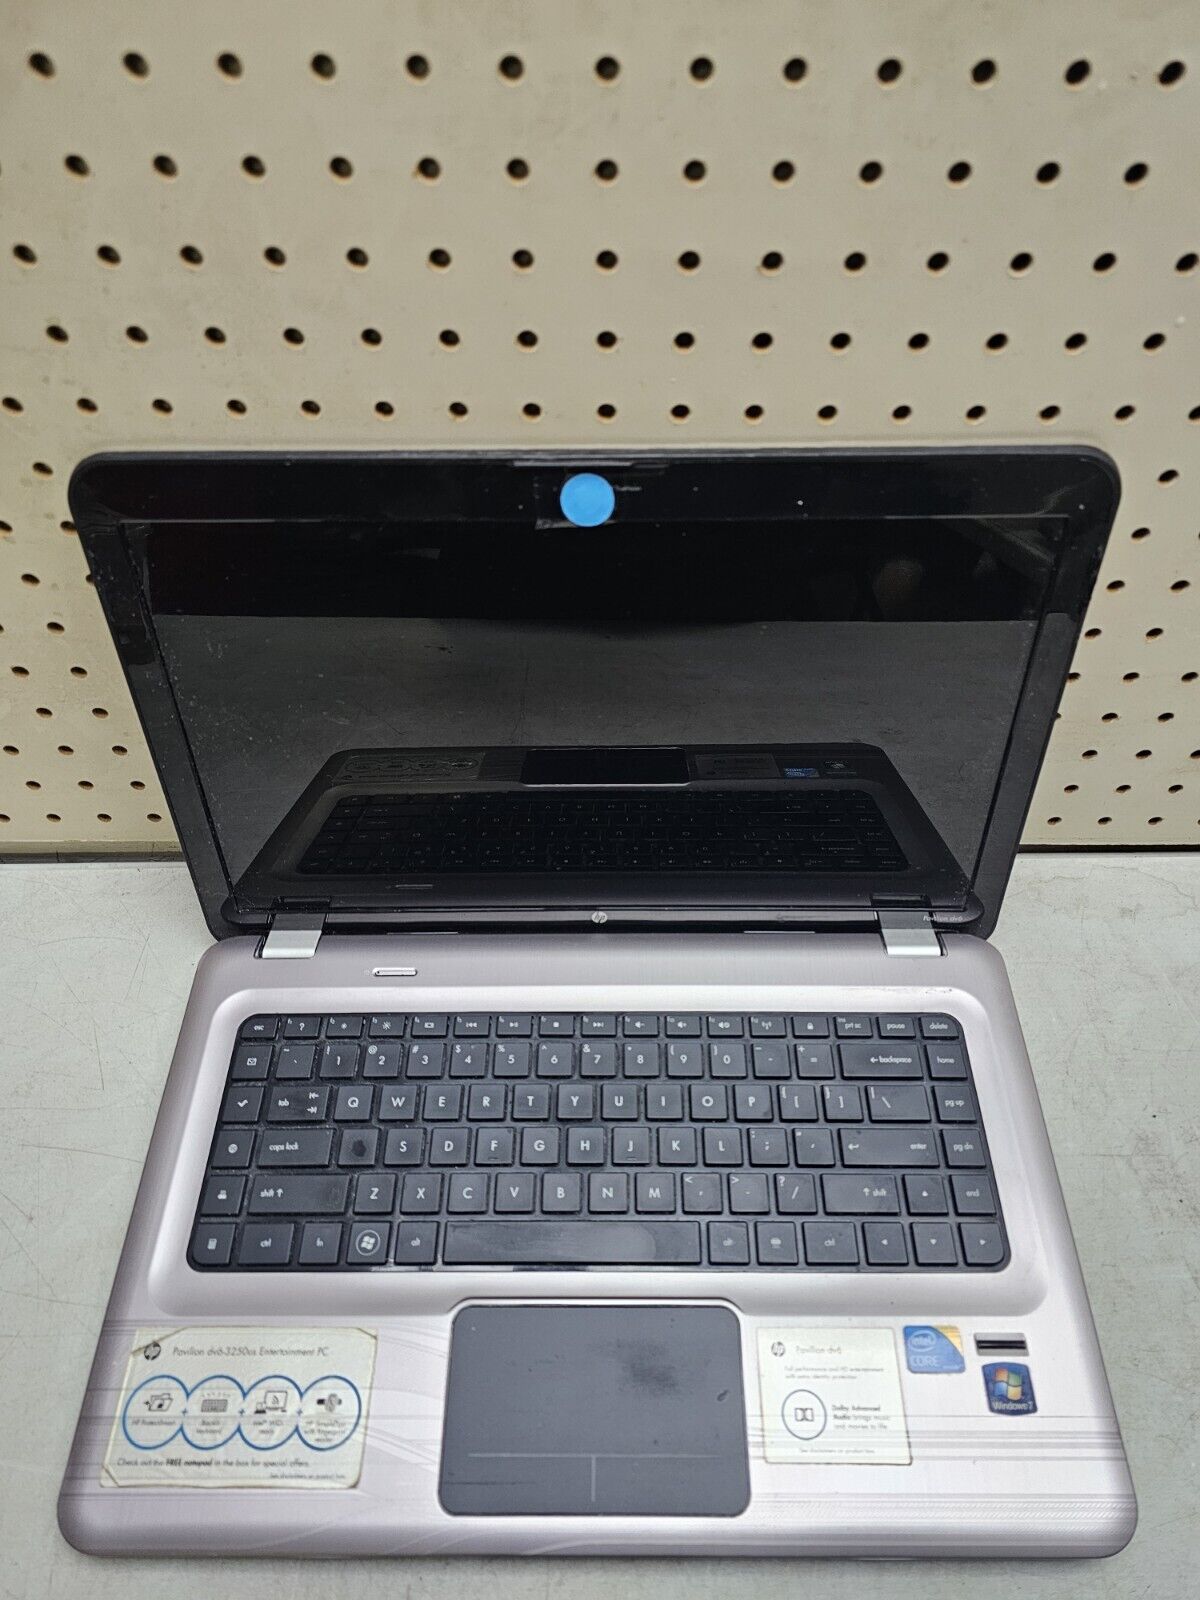 HP Pavilion dv6-325us Laptop - AMD Turion 64 - NO HDD/RAM/OS - Read Description